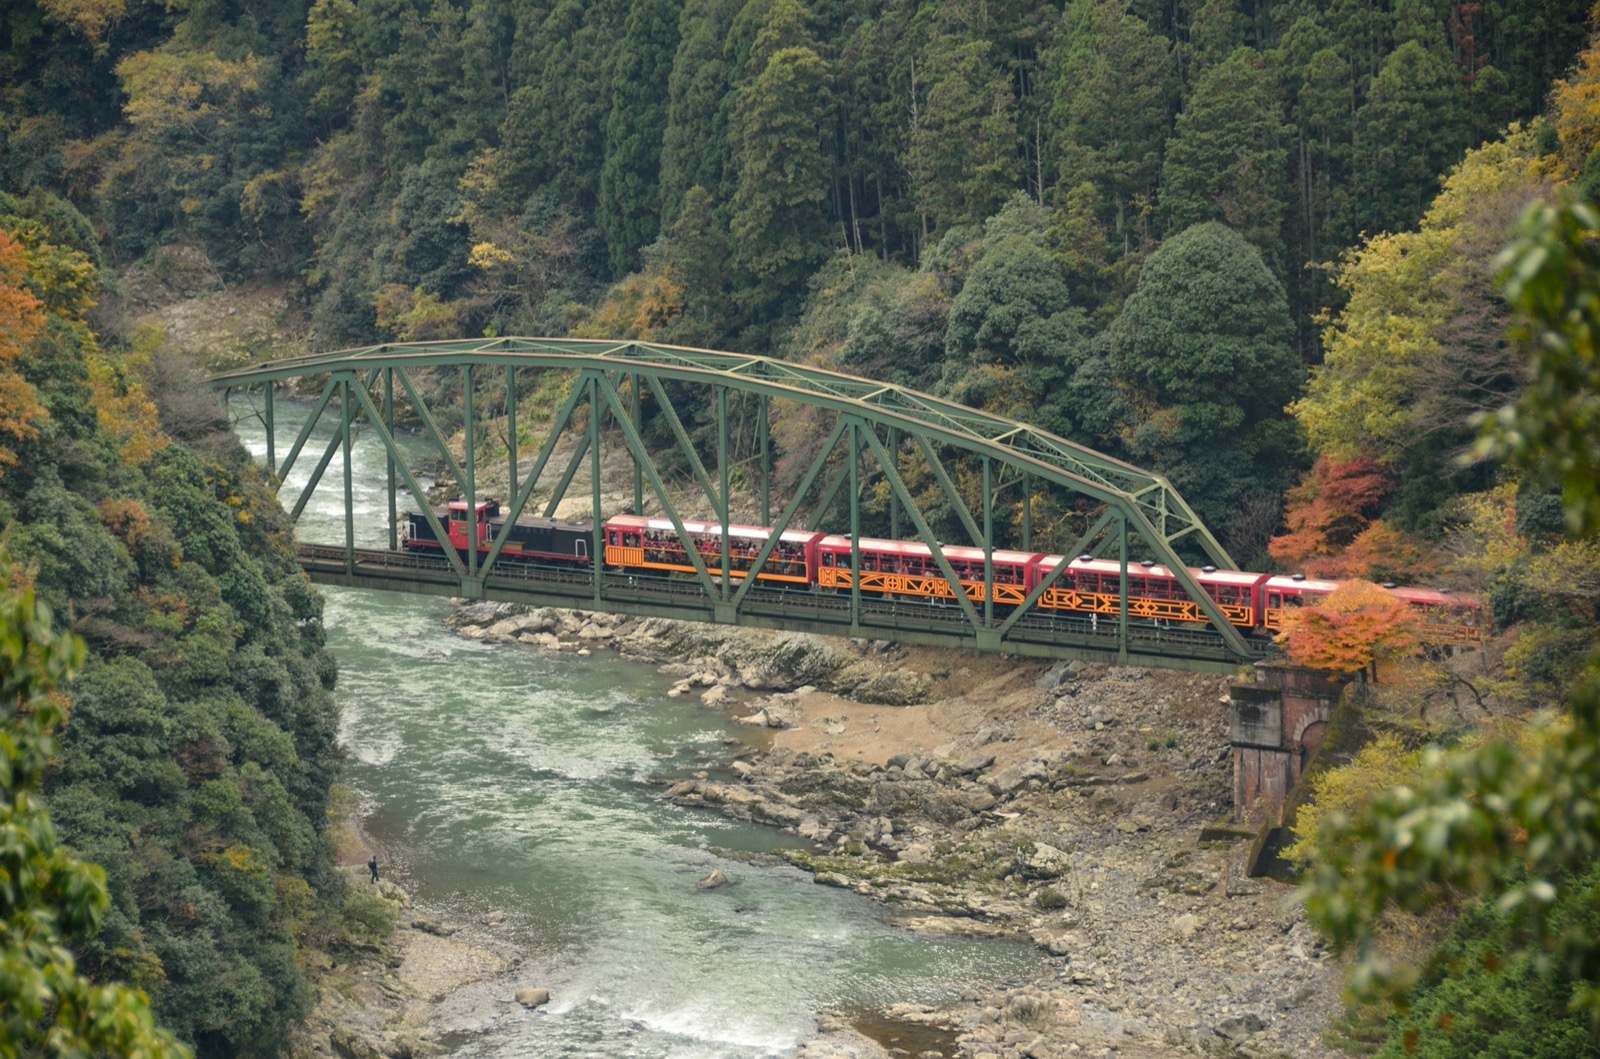 Photo of Sagano Romantic Railway, Japan (autumn foliage 2012 by Takeshi Kuboki)